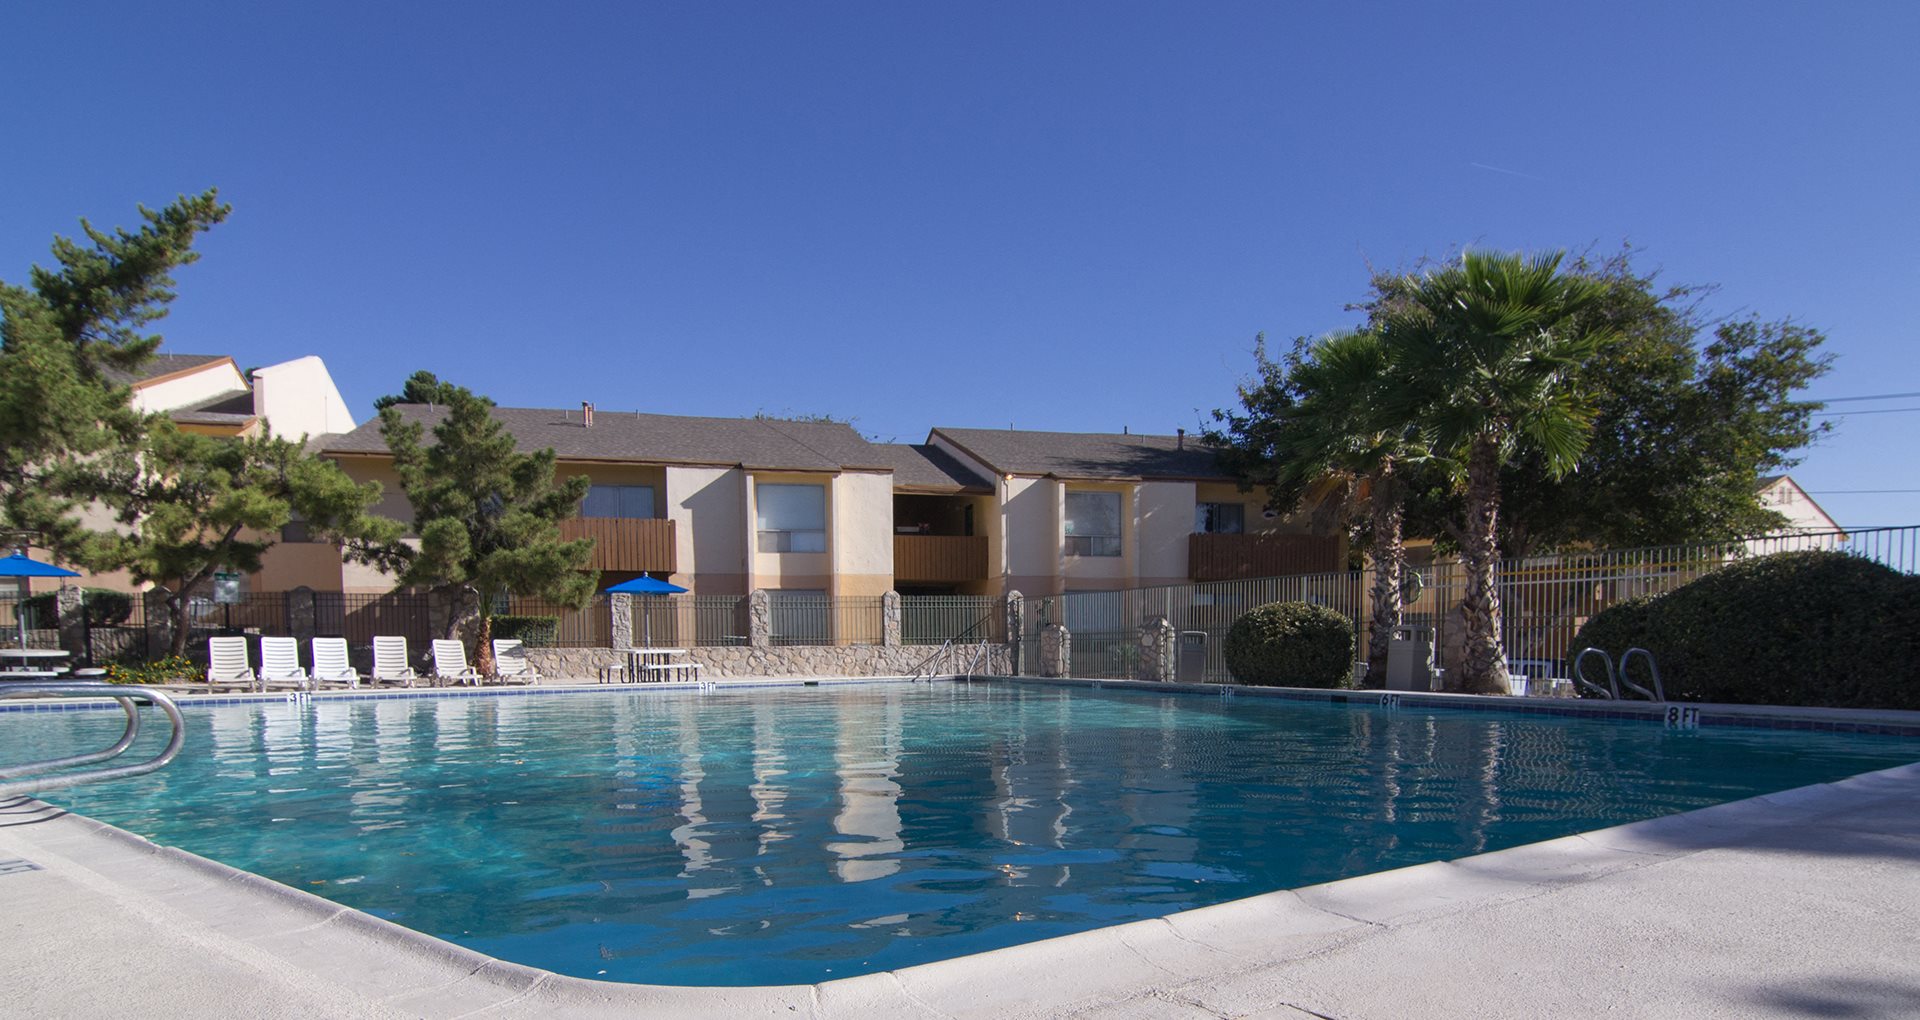 Pool, lounge chairs, apt building  Ridgemar Apts For Rent l El Paso TX